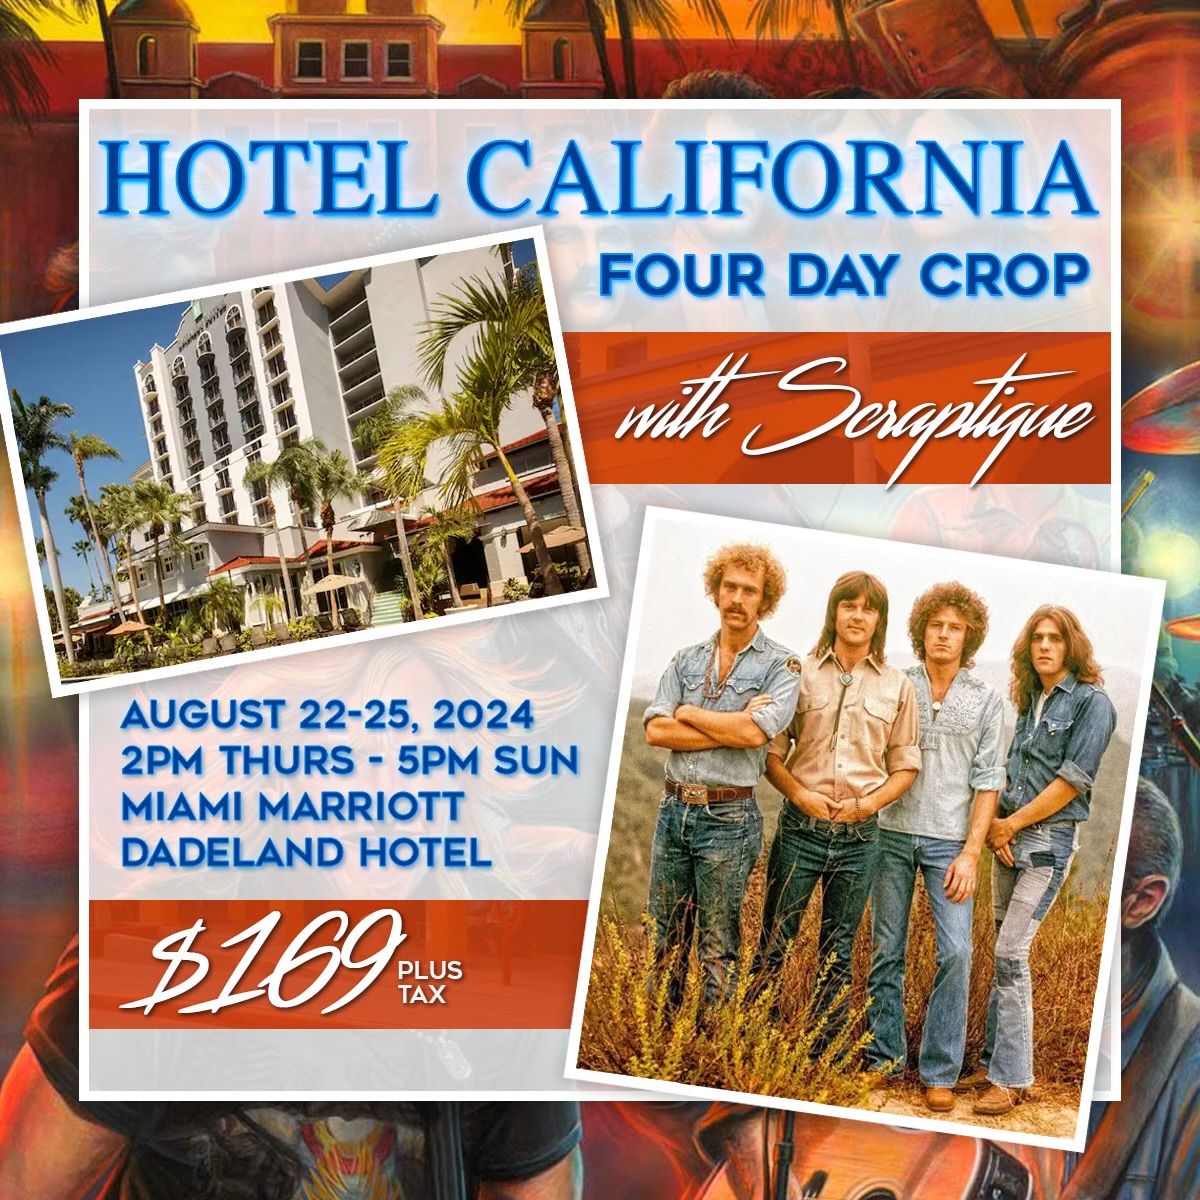 Scraptique Hotel California 4 Day Crop